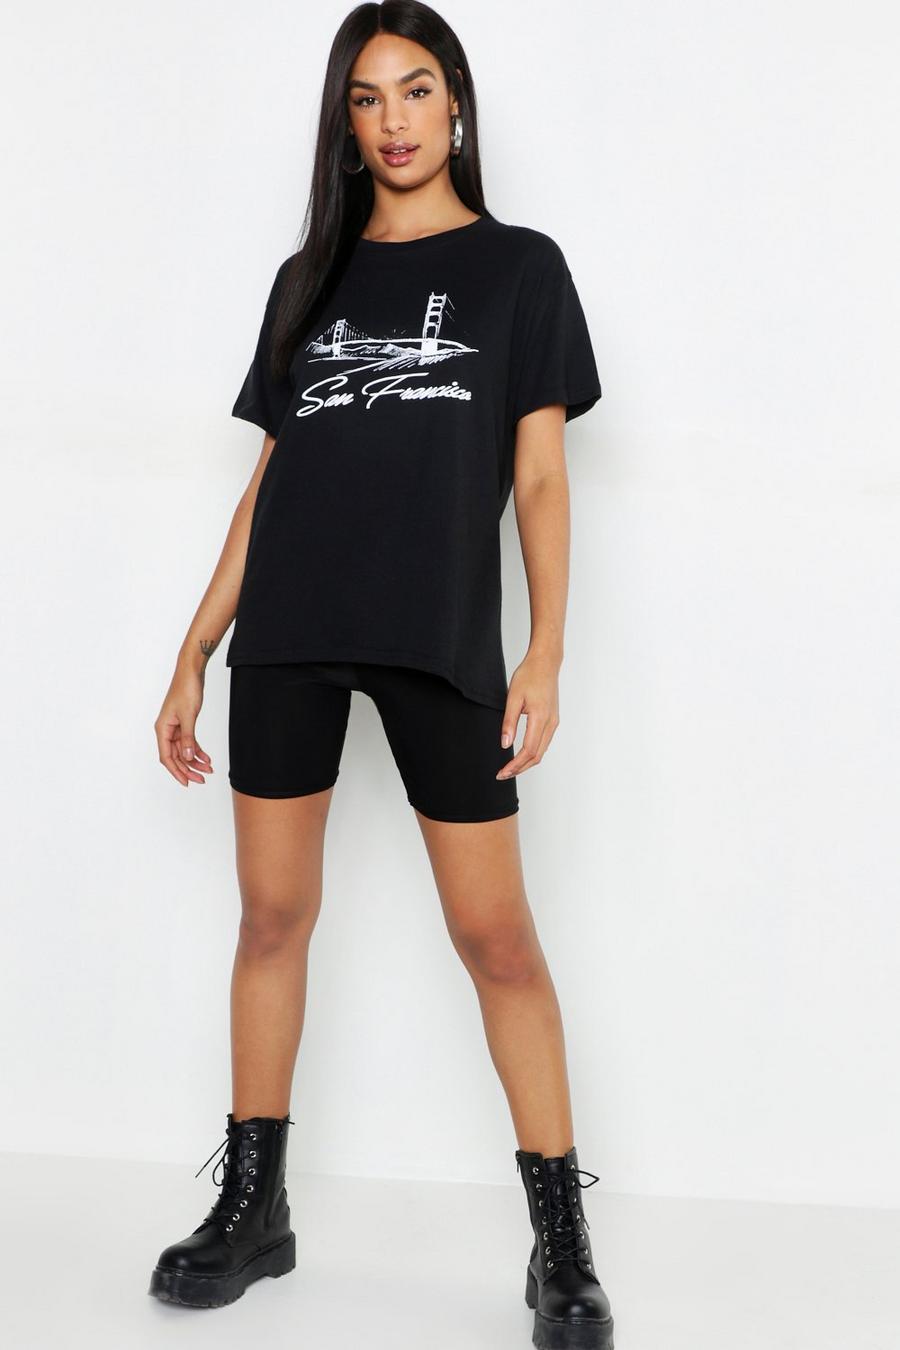 Camiseta con eslogan “San Fran” Tall image number 1